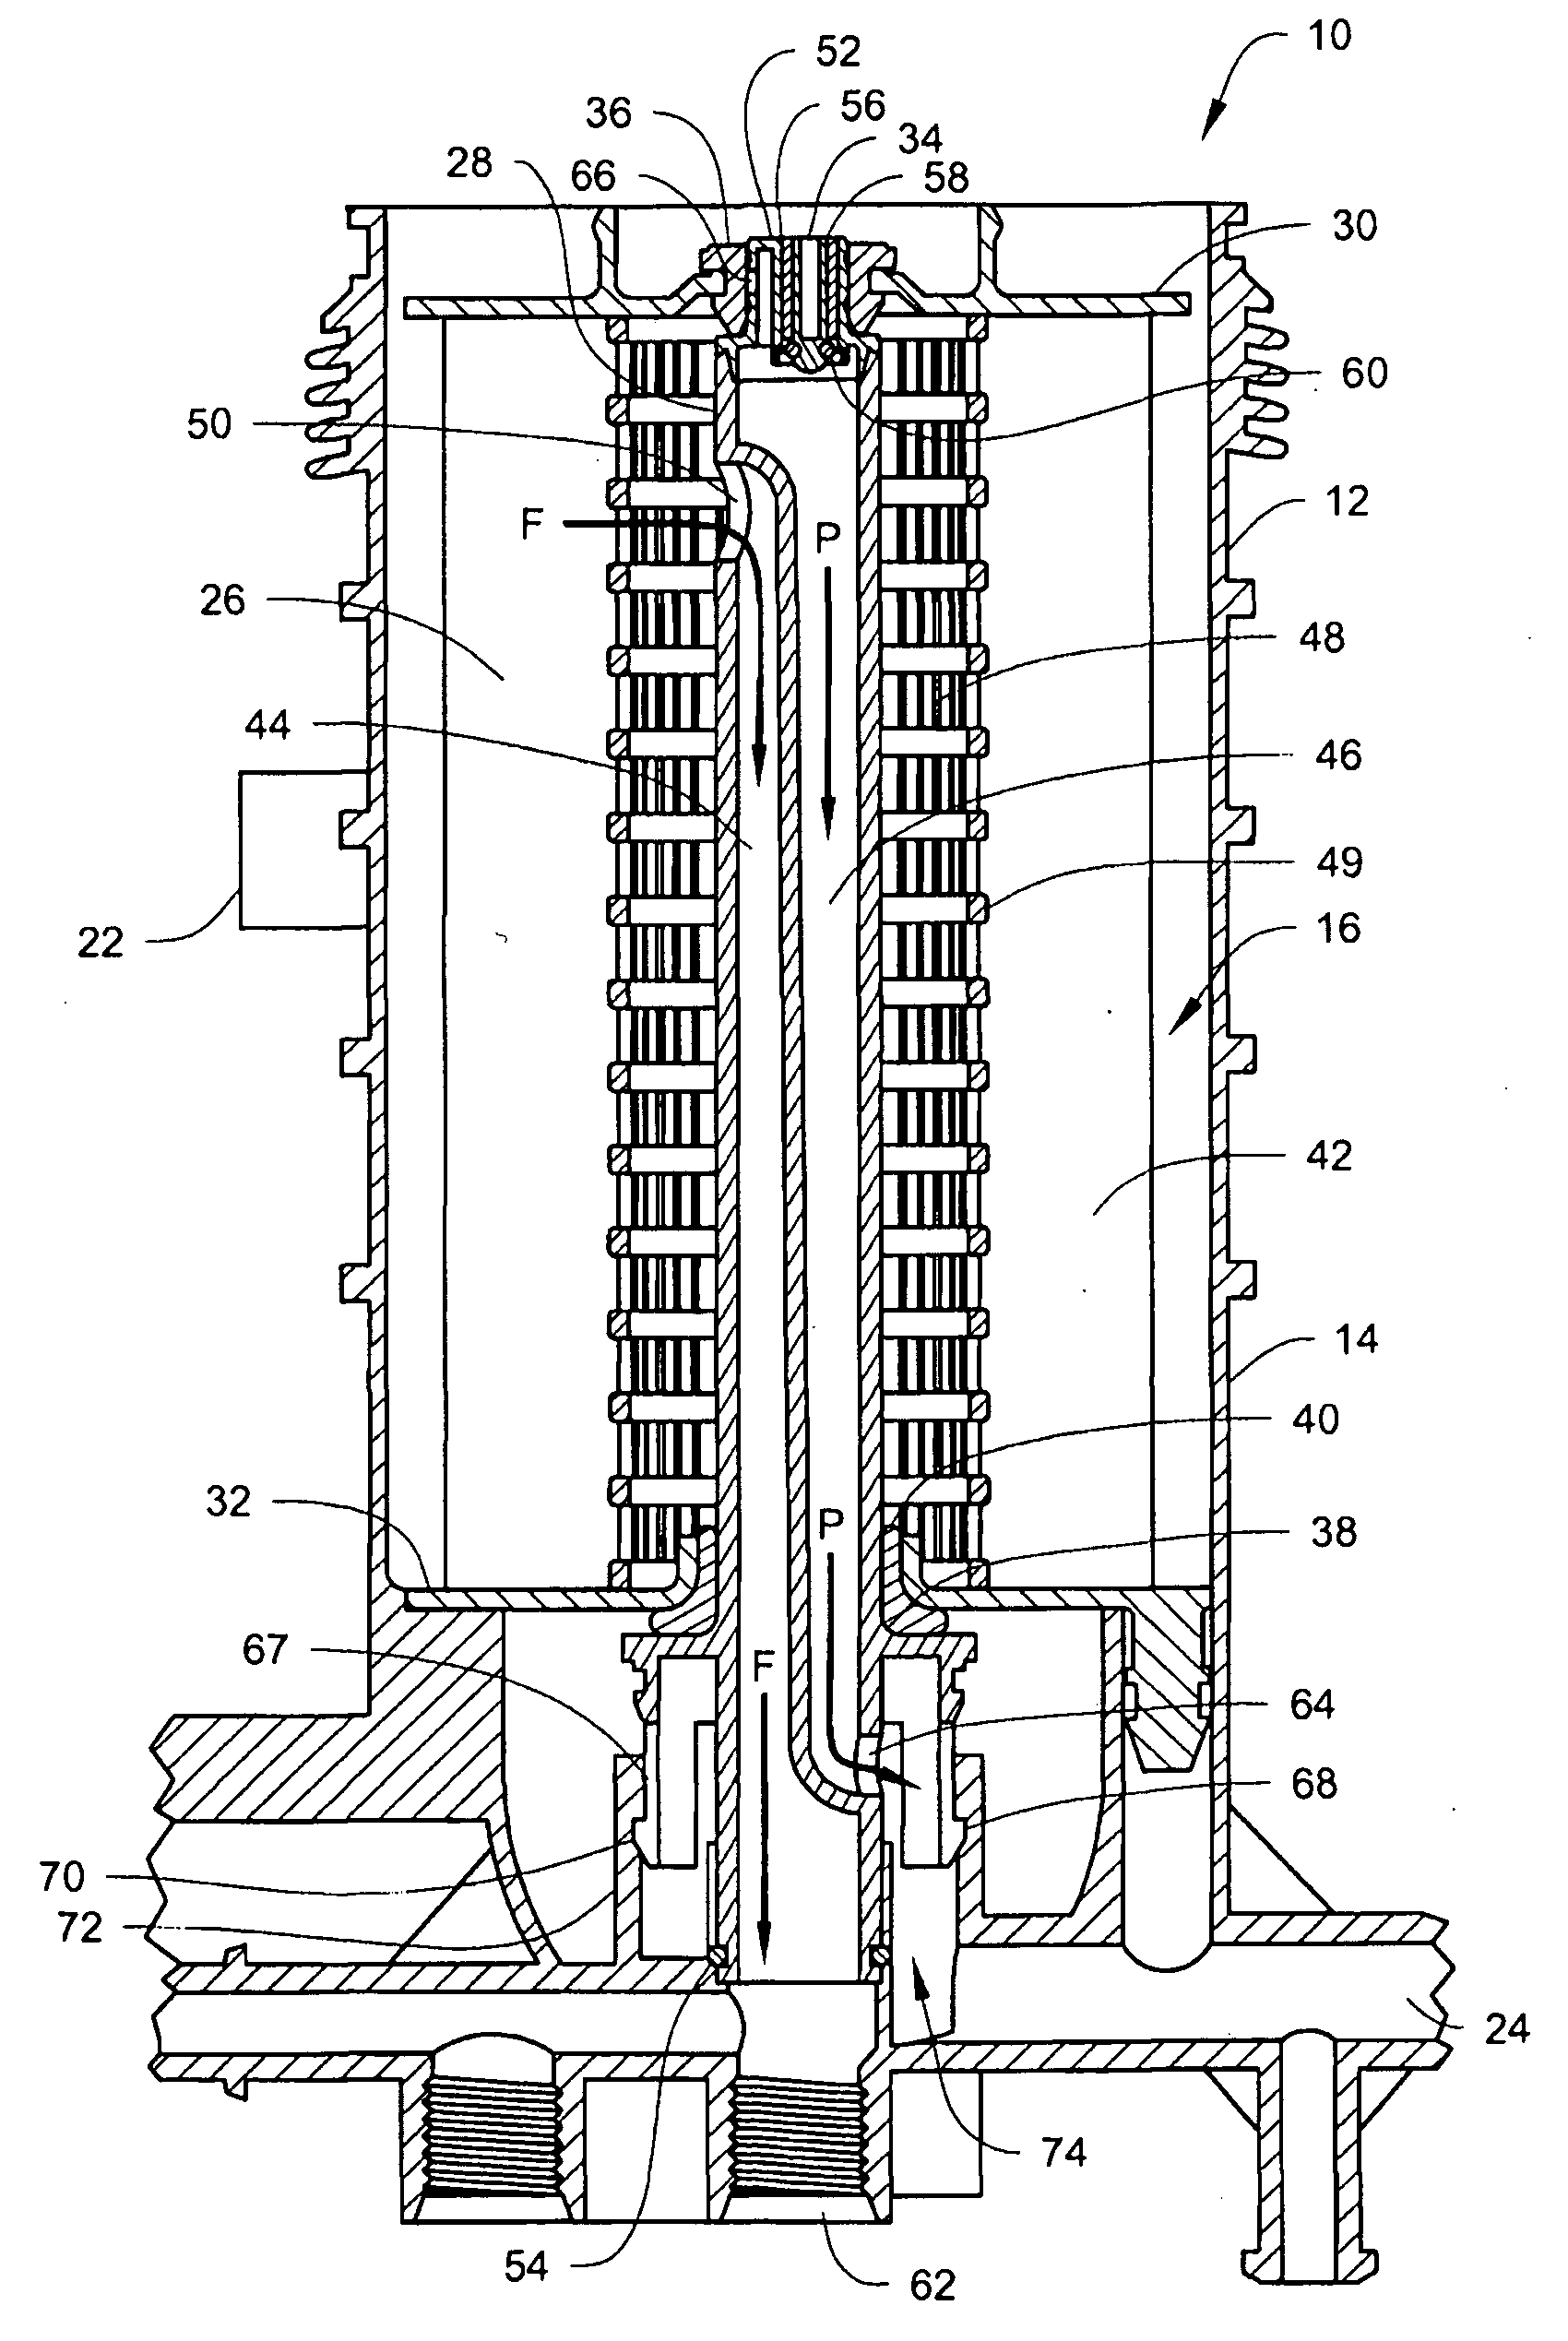 Standpipe with integrated regulator valve